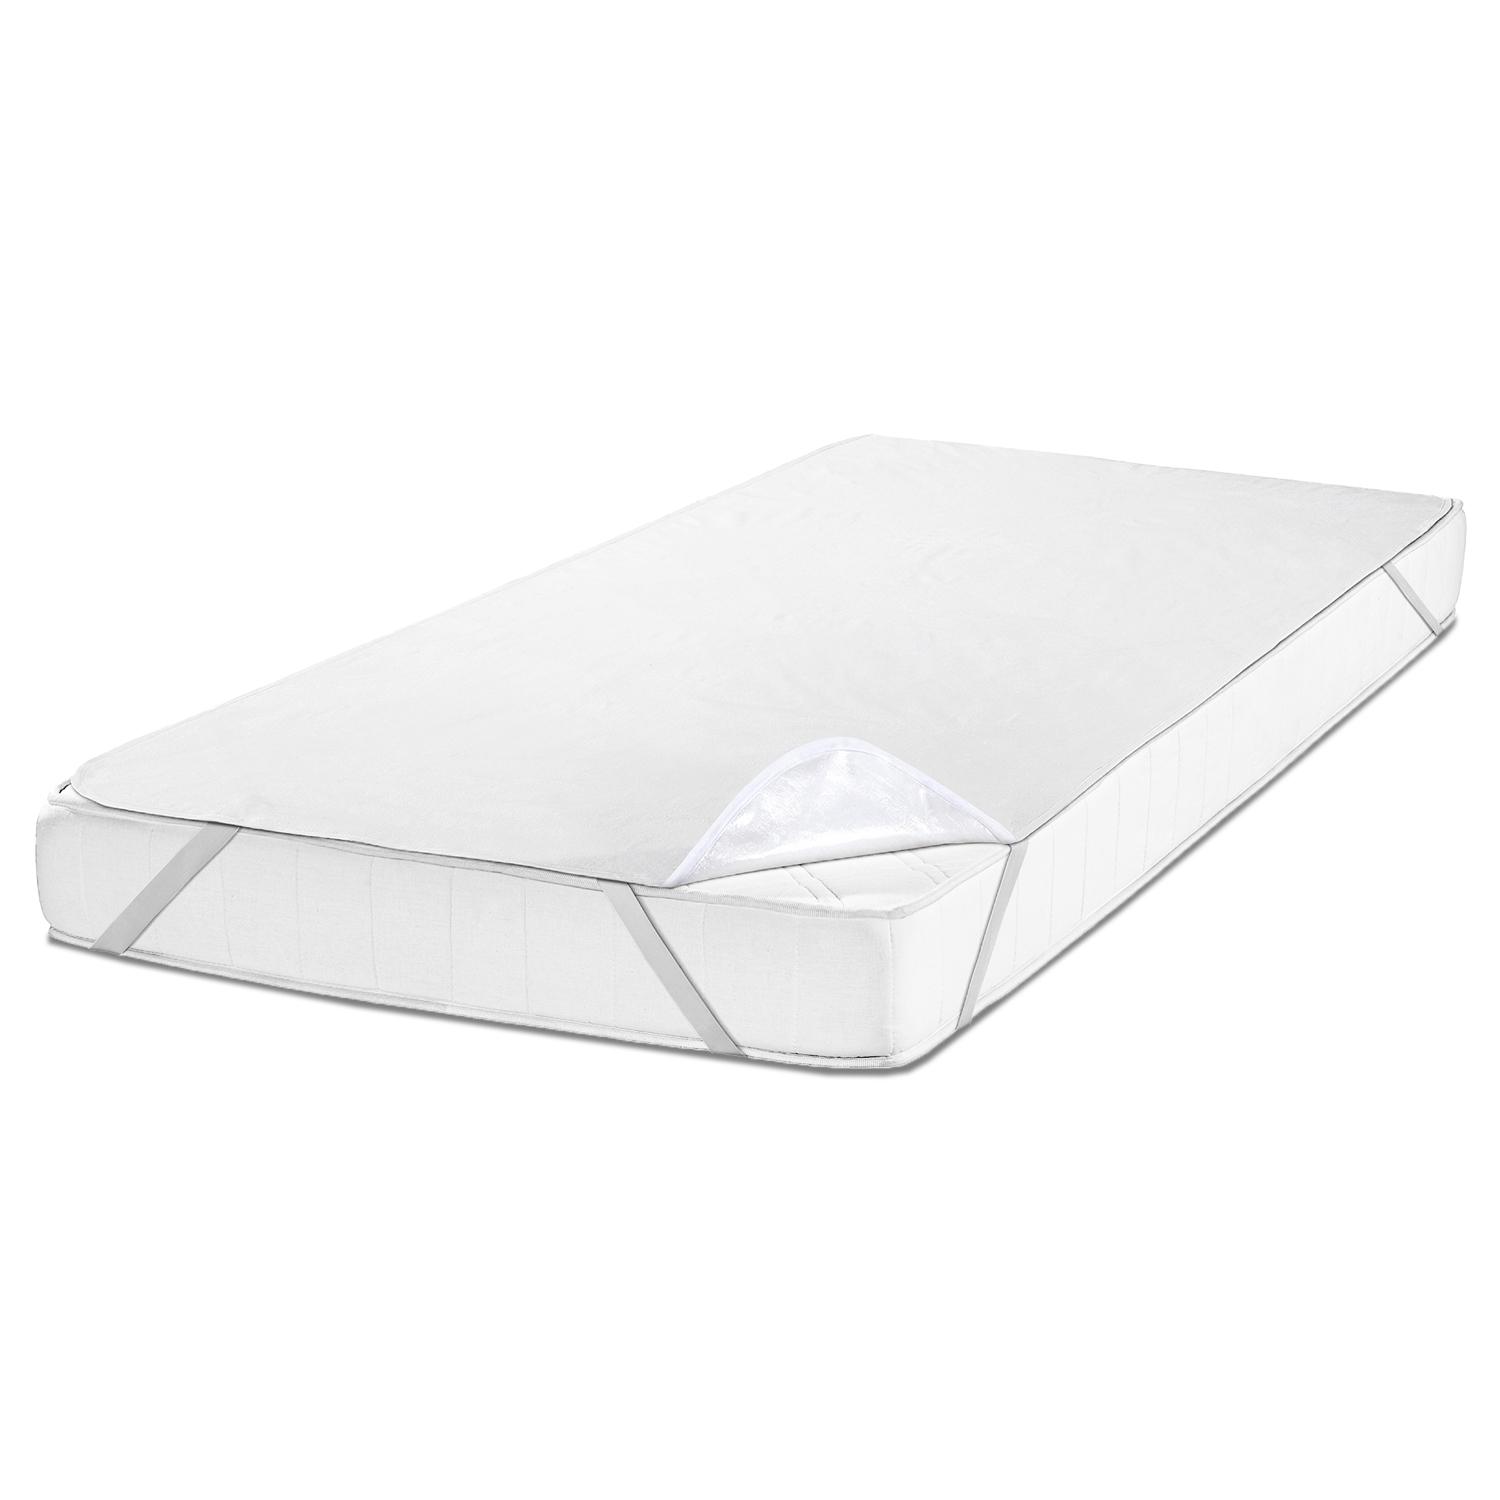 Sleezzz Vital waterdichte molleton matrasbeschermer vaste spanning 90 x 190 cm, matrasbeschermer van 100% katoen in wit